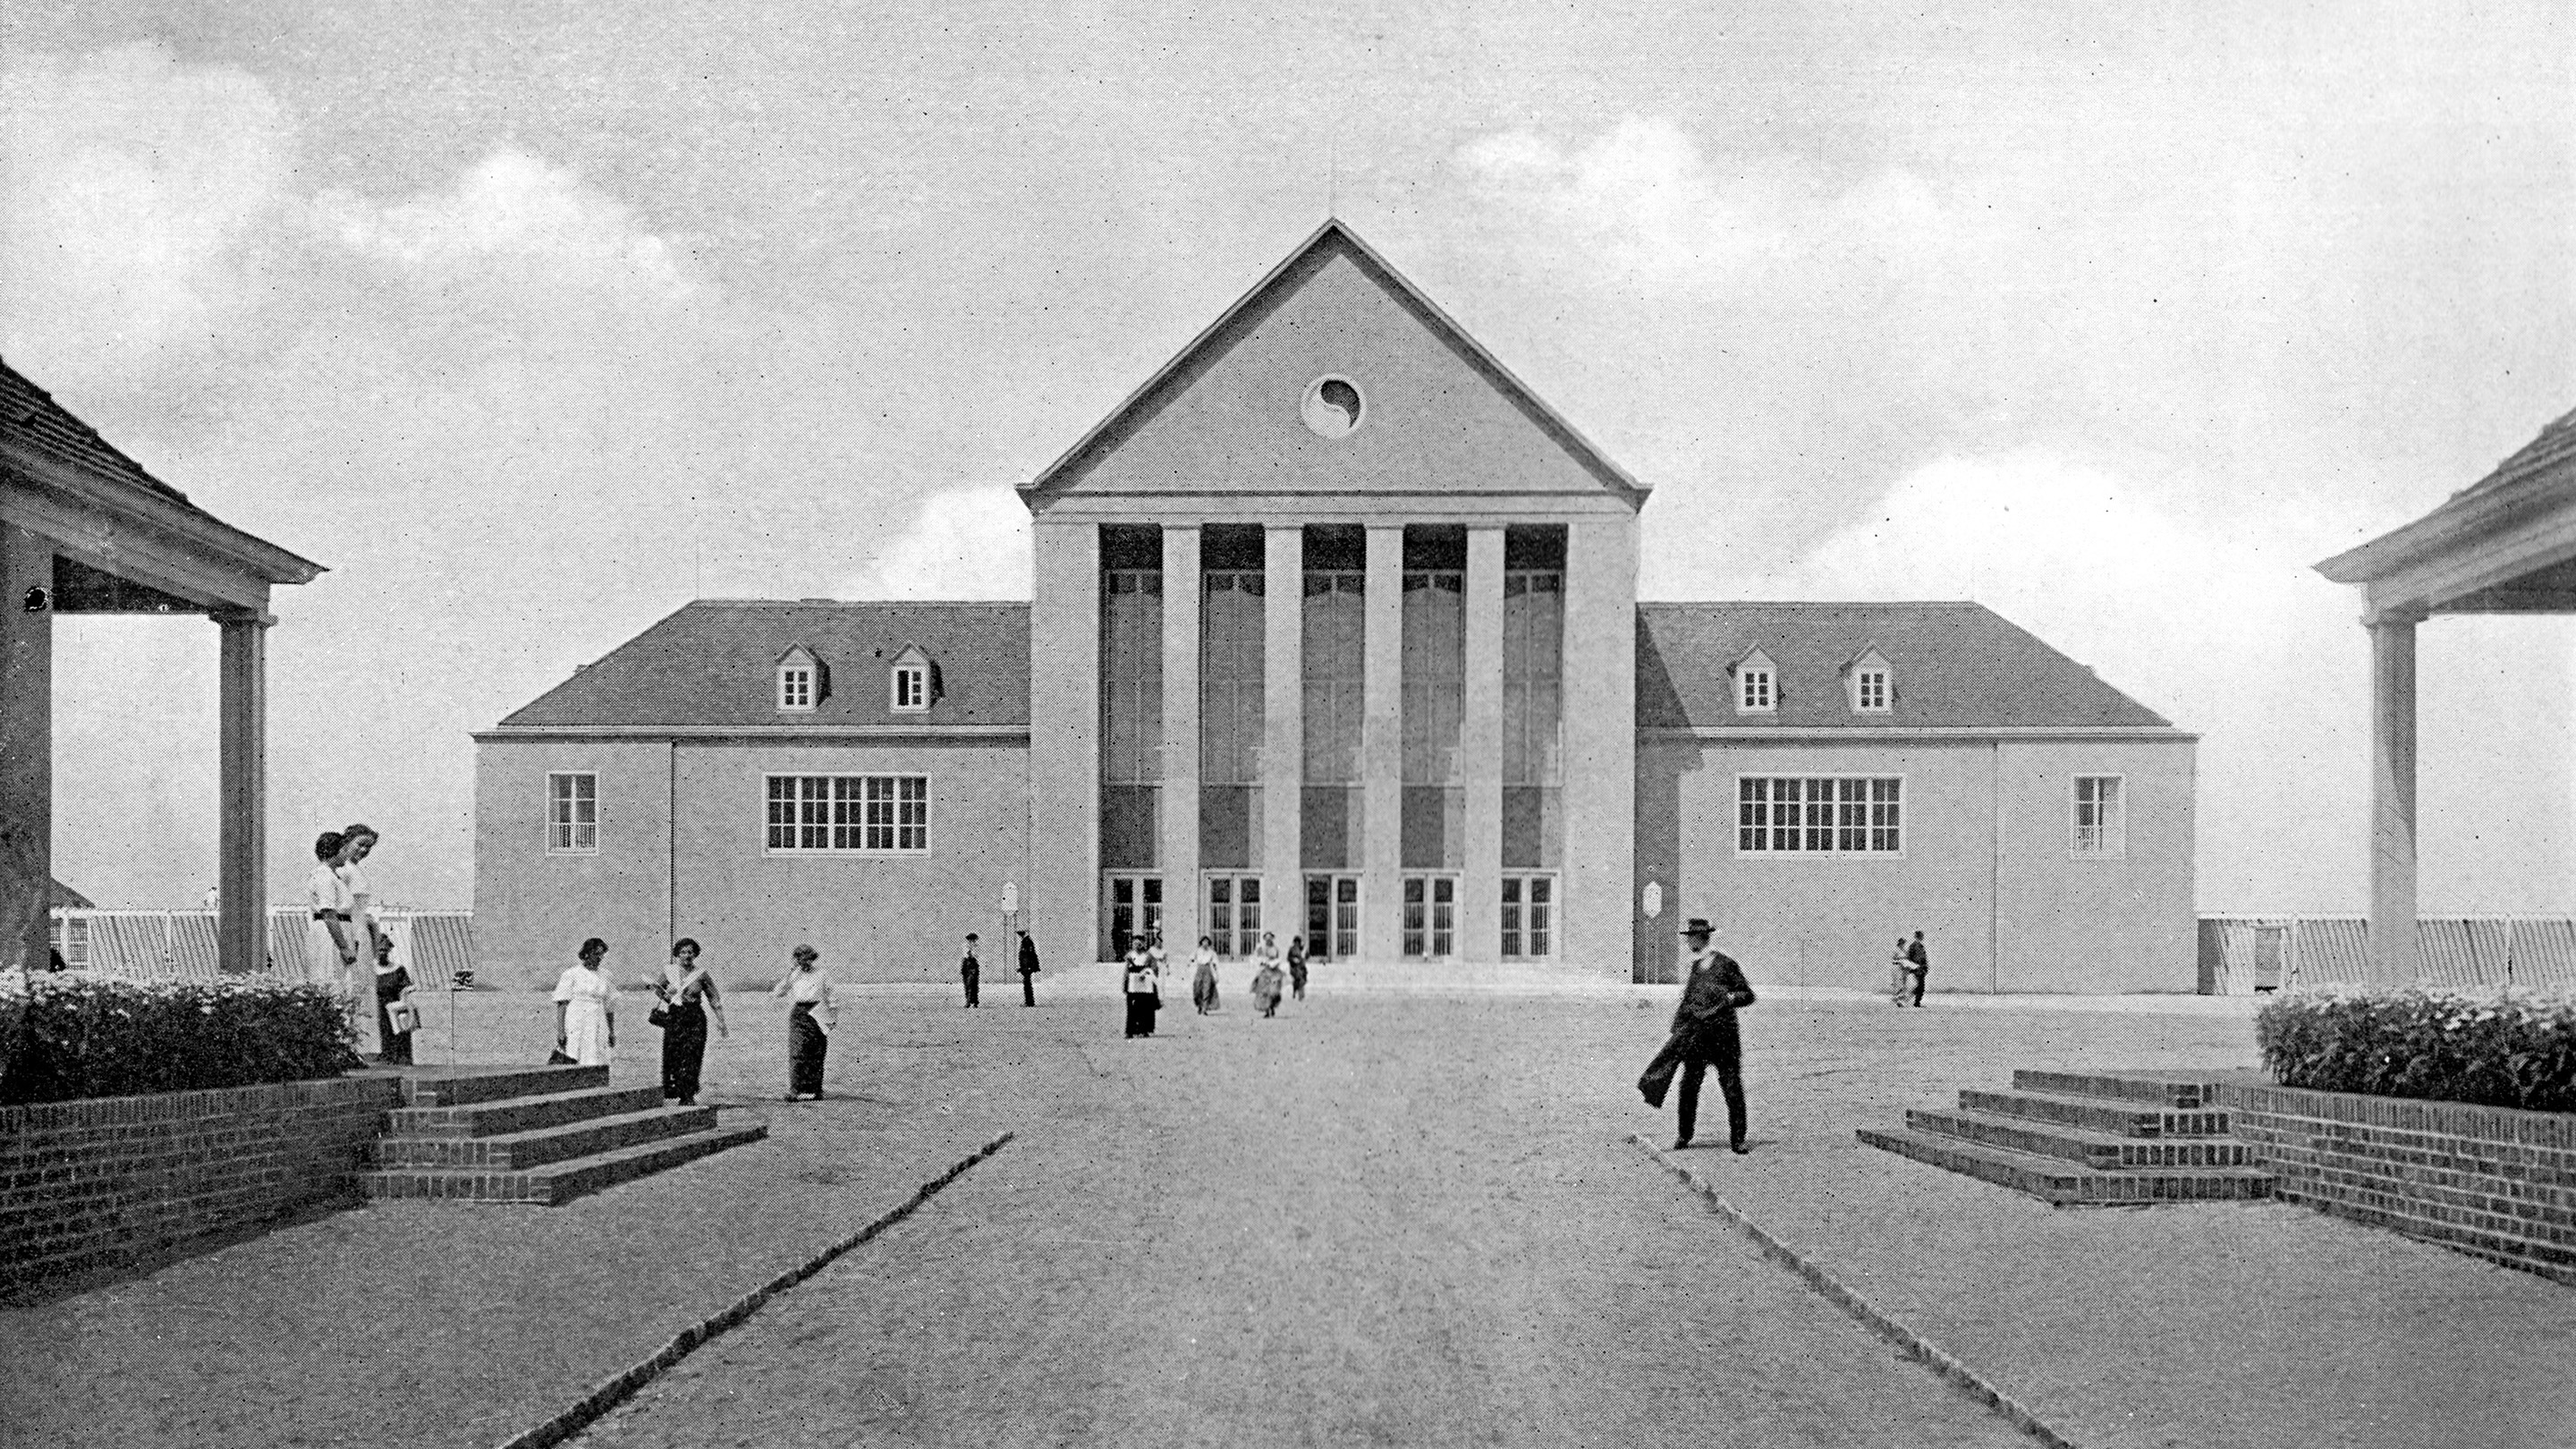 Heinrich Tessenow, Istituto per la ginnastica ritmica, Hellerau, 1912